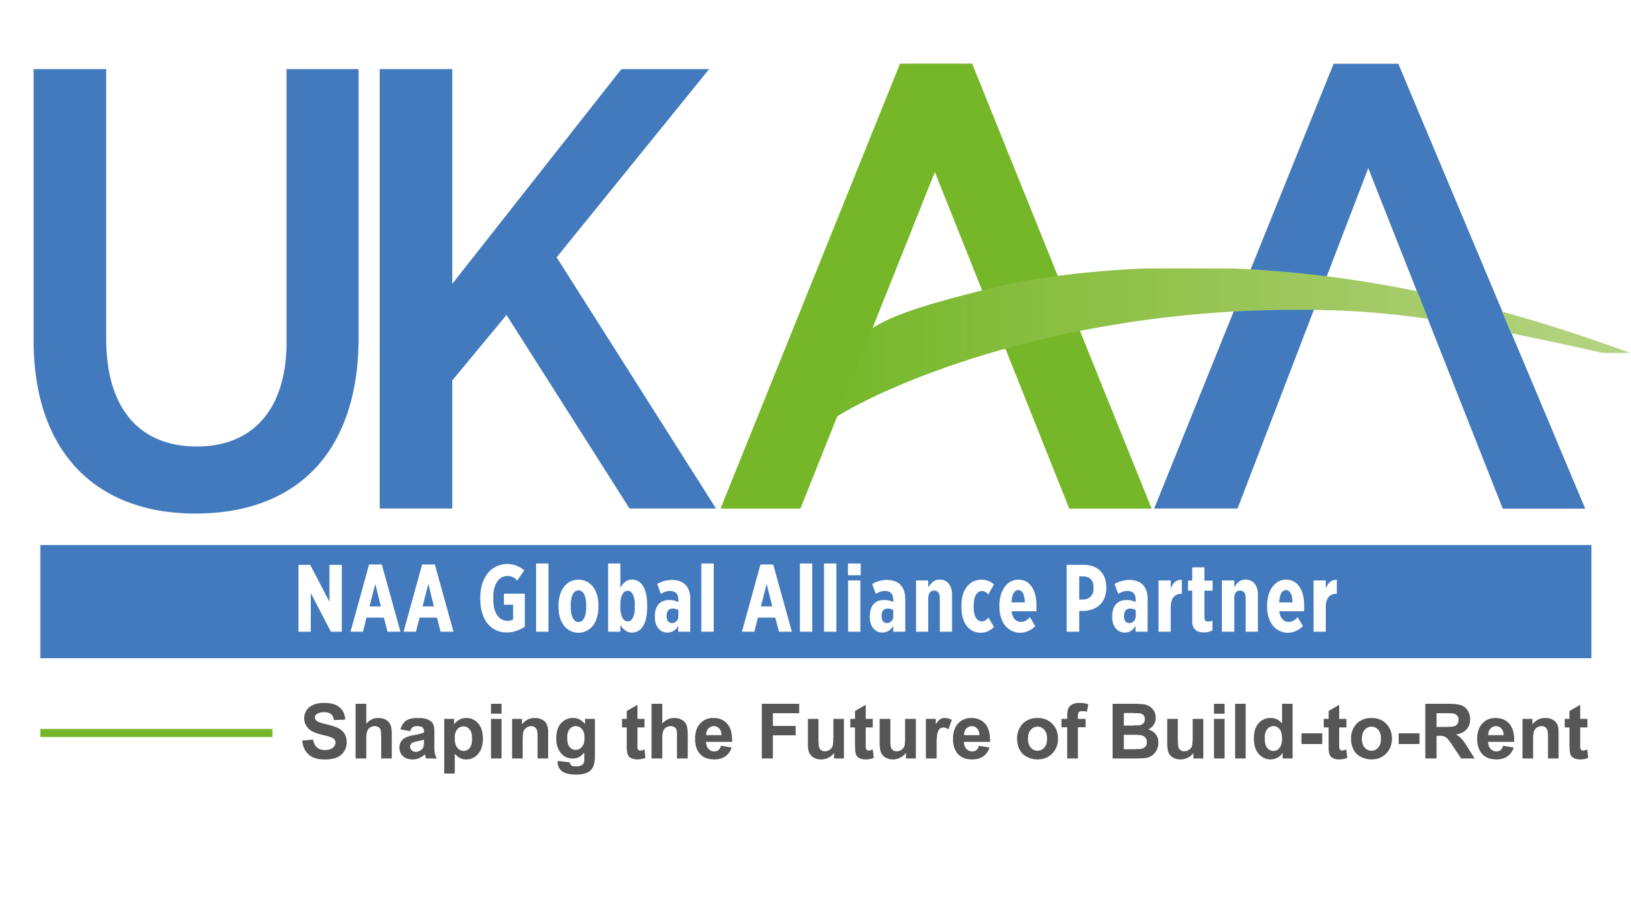 UKAA Logo